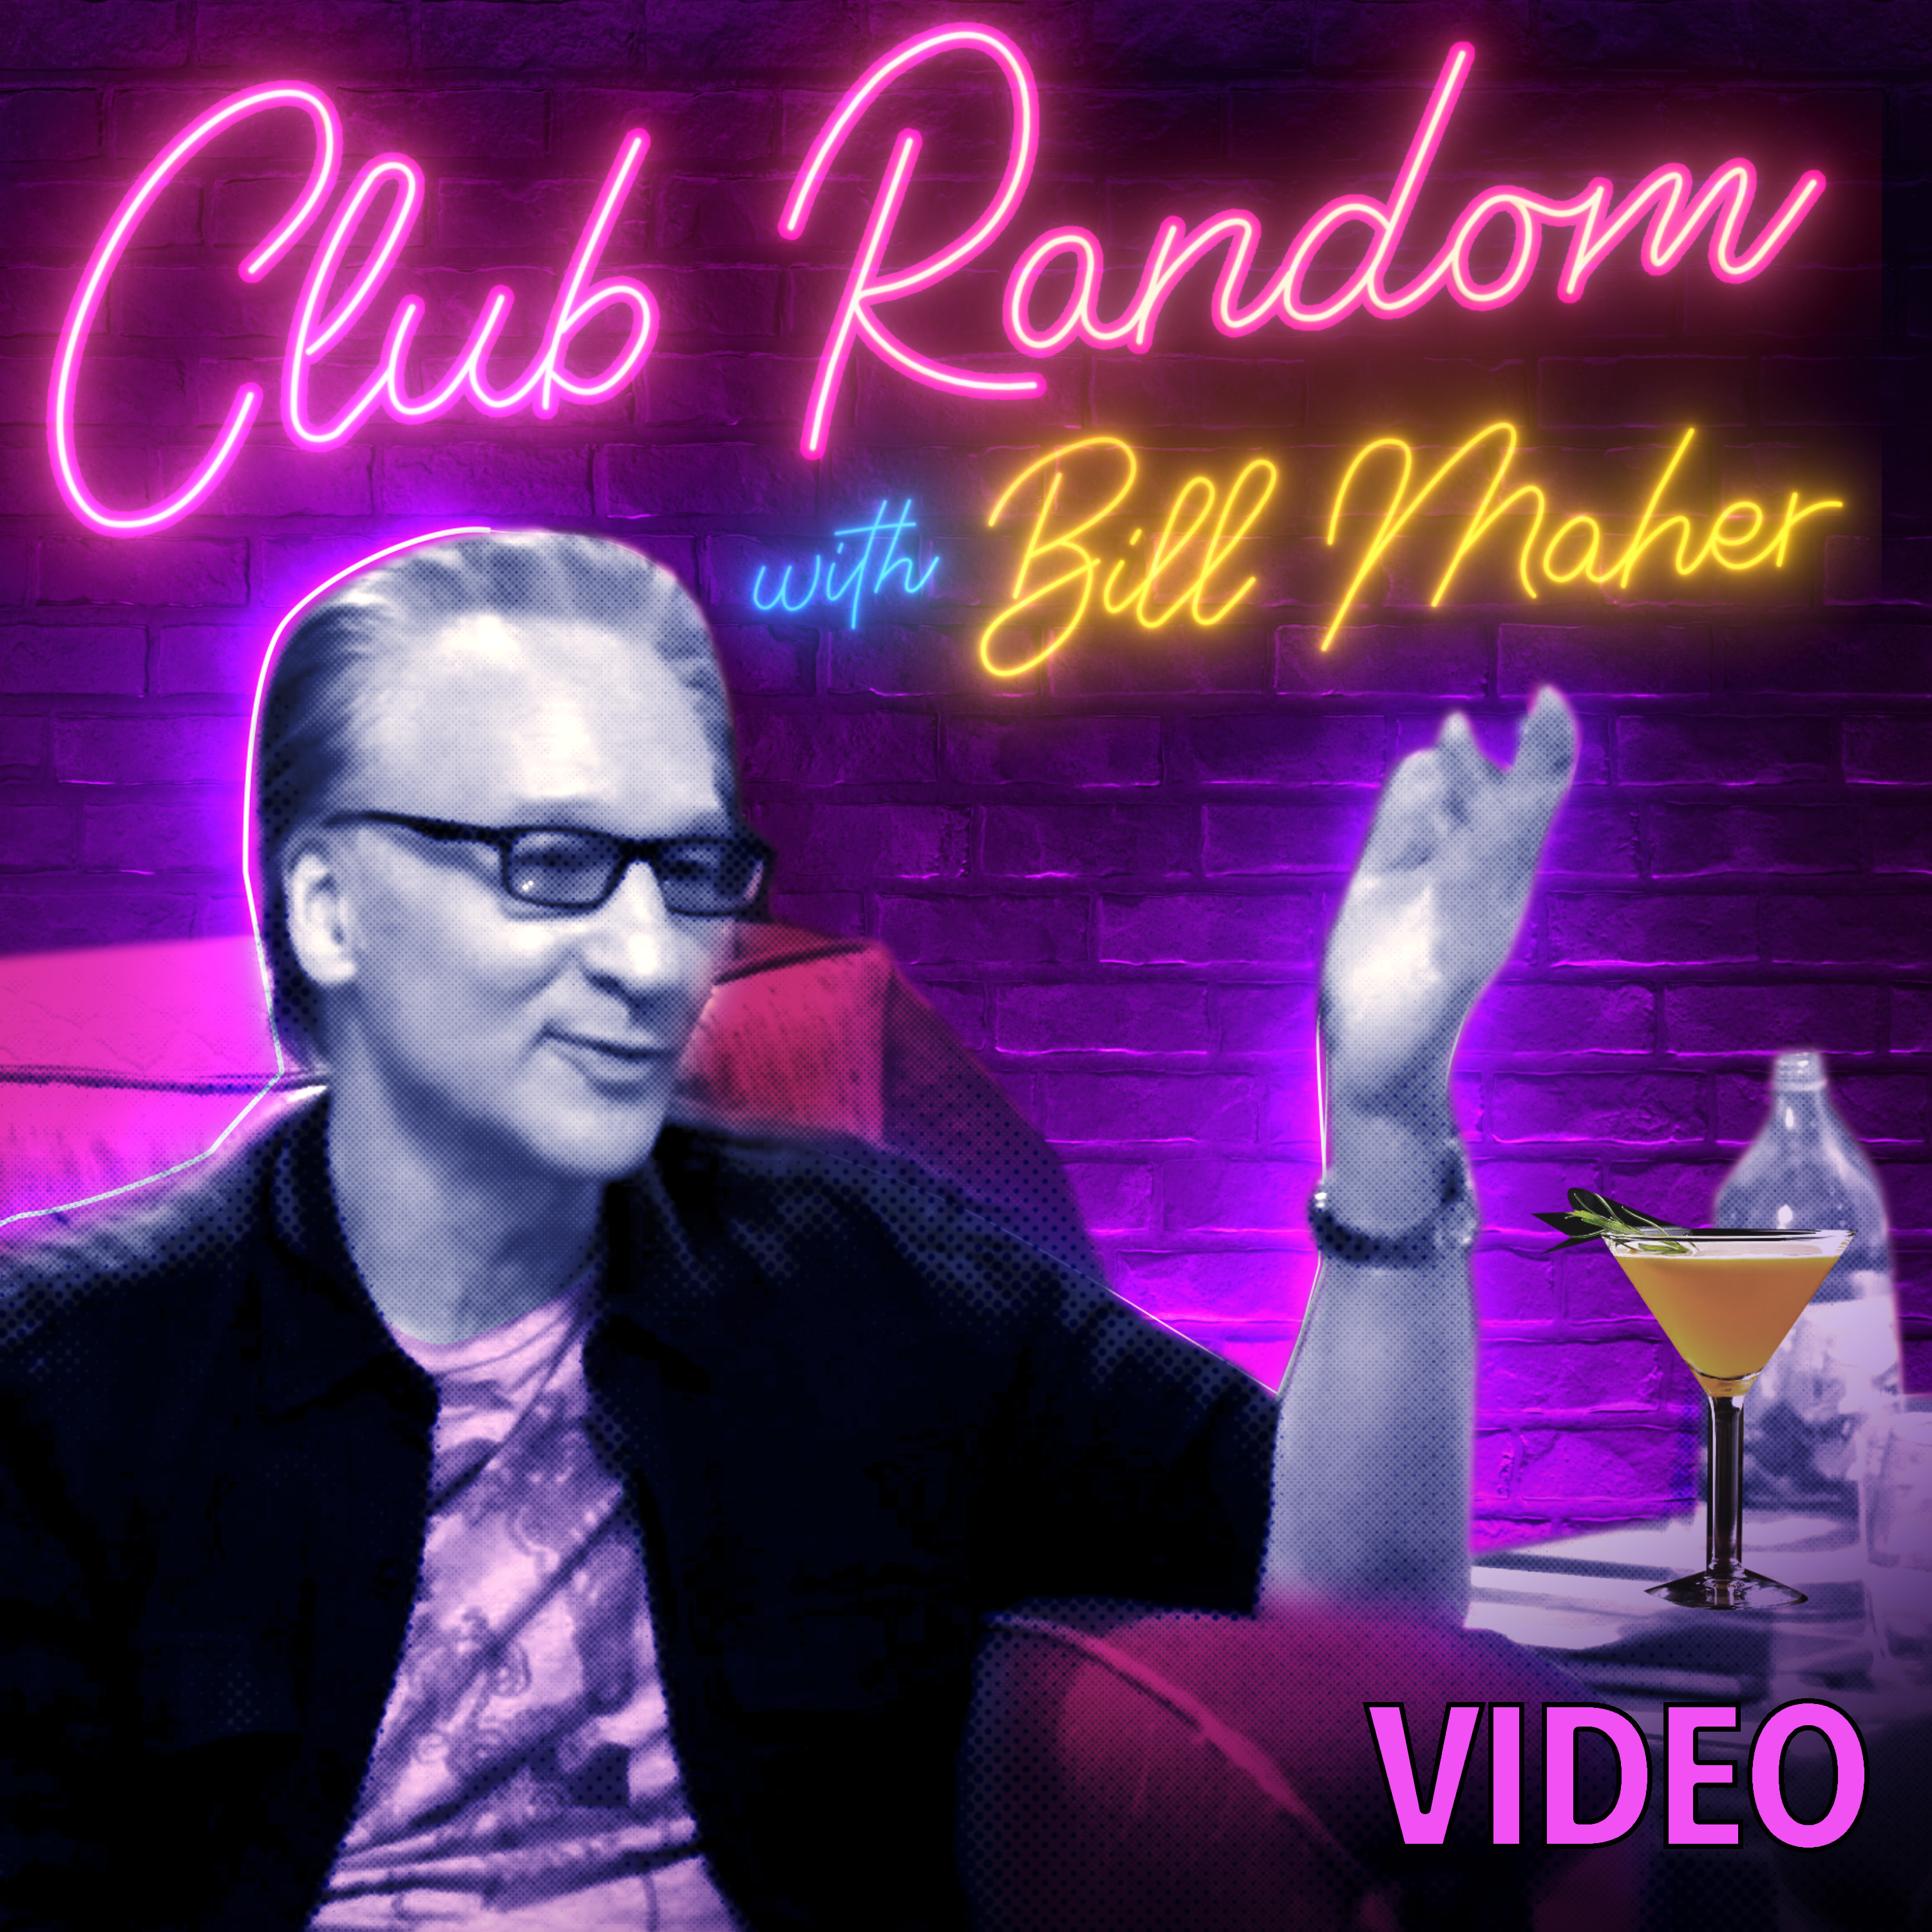 Video: Billy Corgan | Club Random with Bill Maher